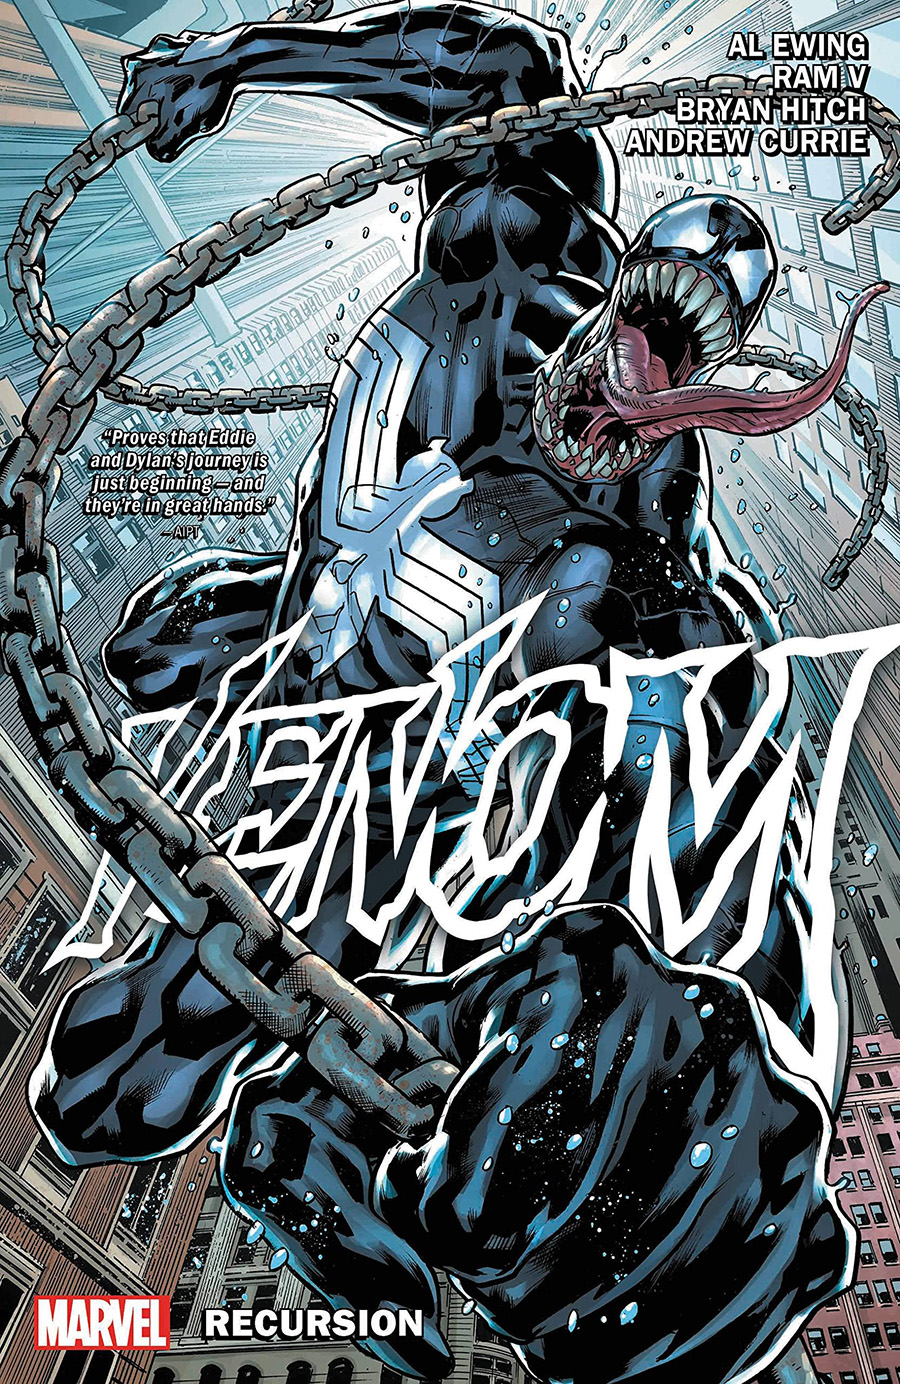 Venom By Al Ewing & Ram V Vol 1 Recursion TP